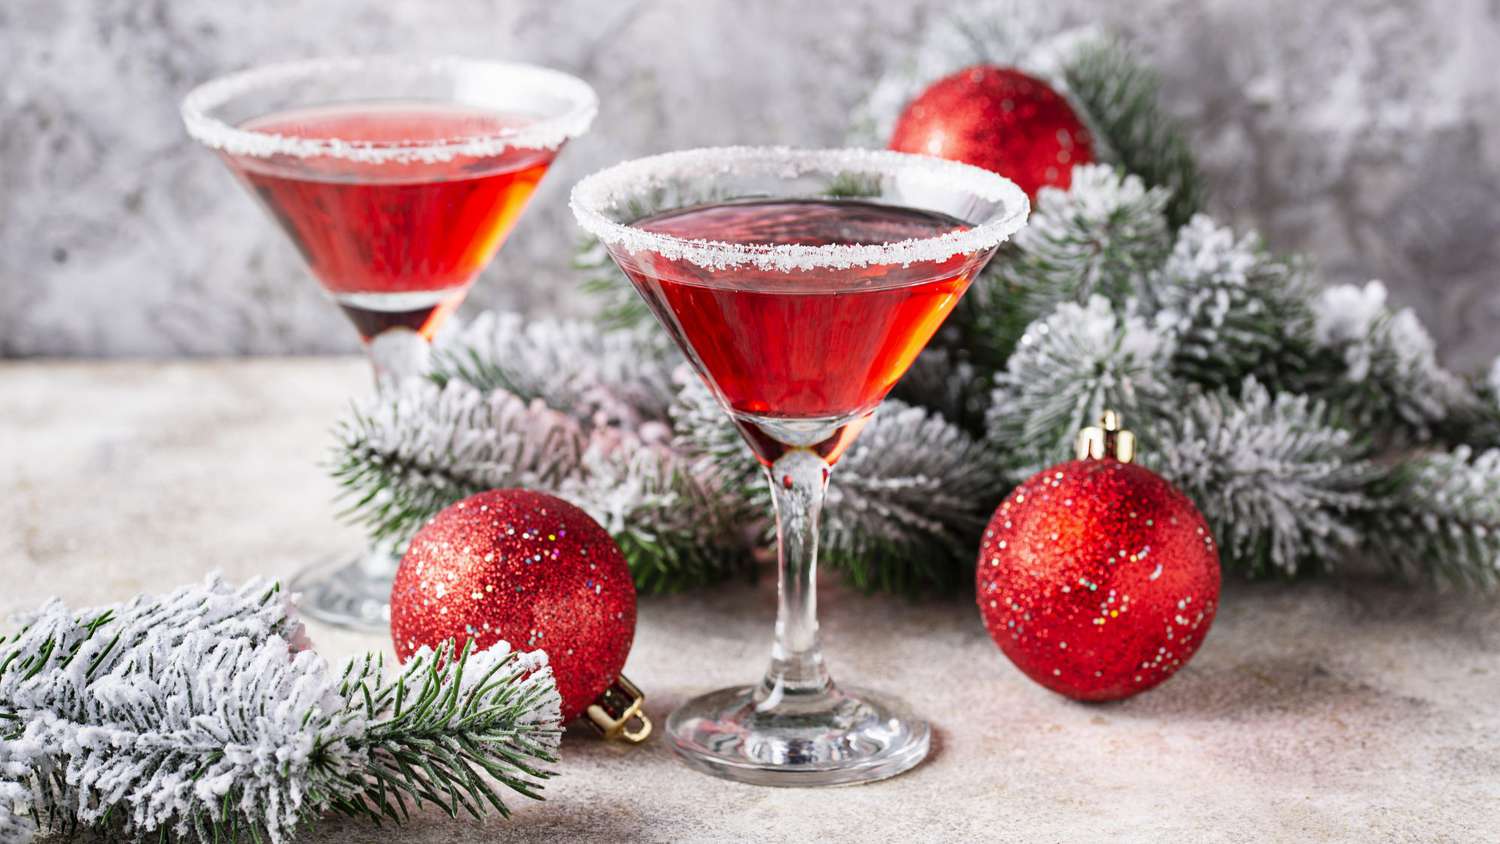 The Terrace Bar Christmas Cheers!